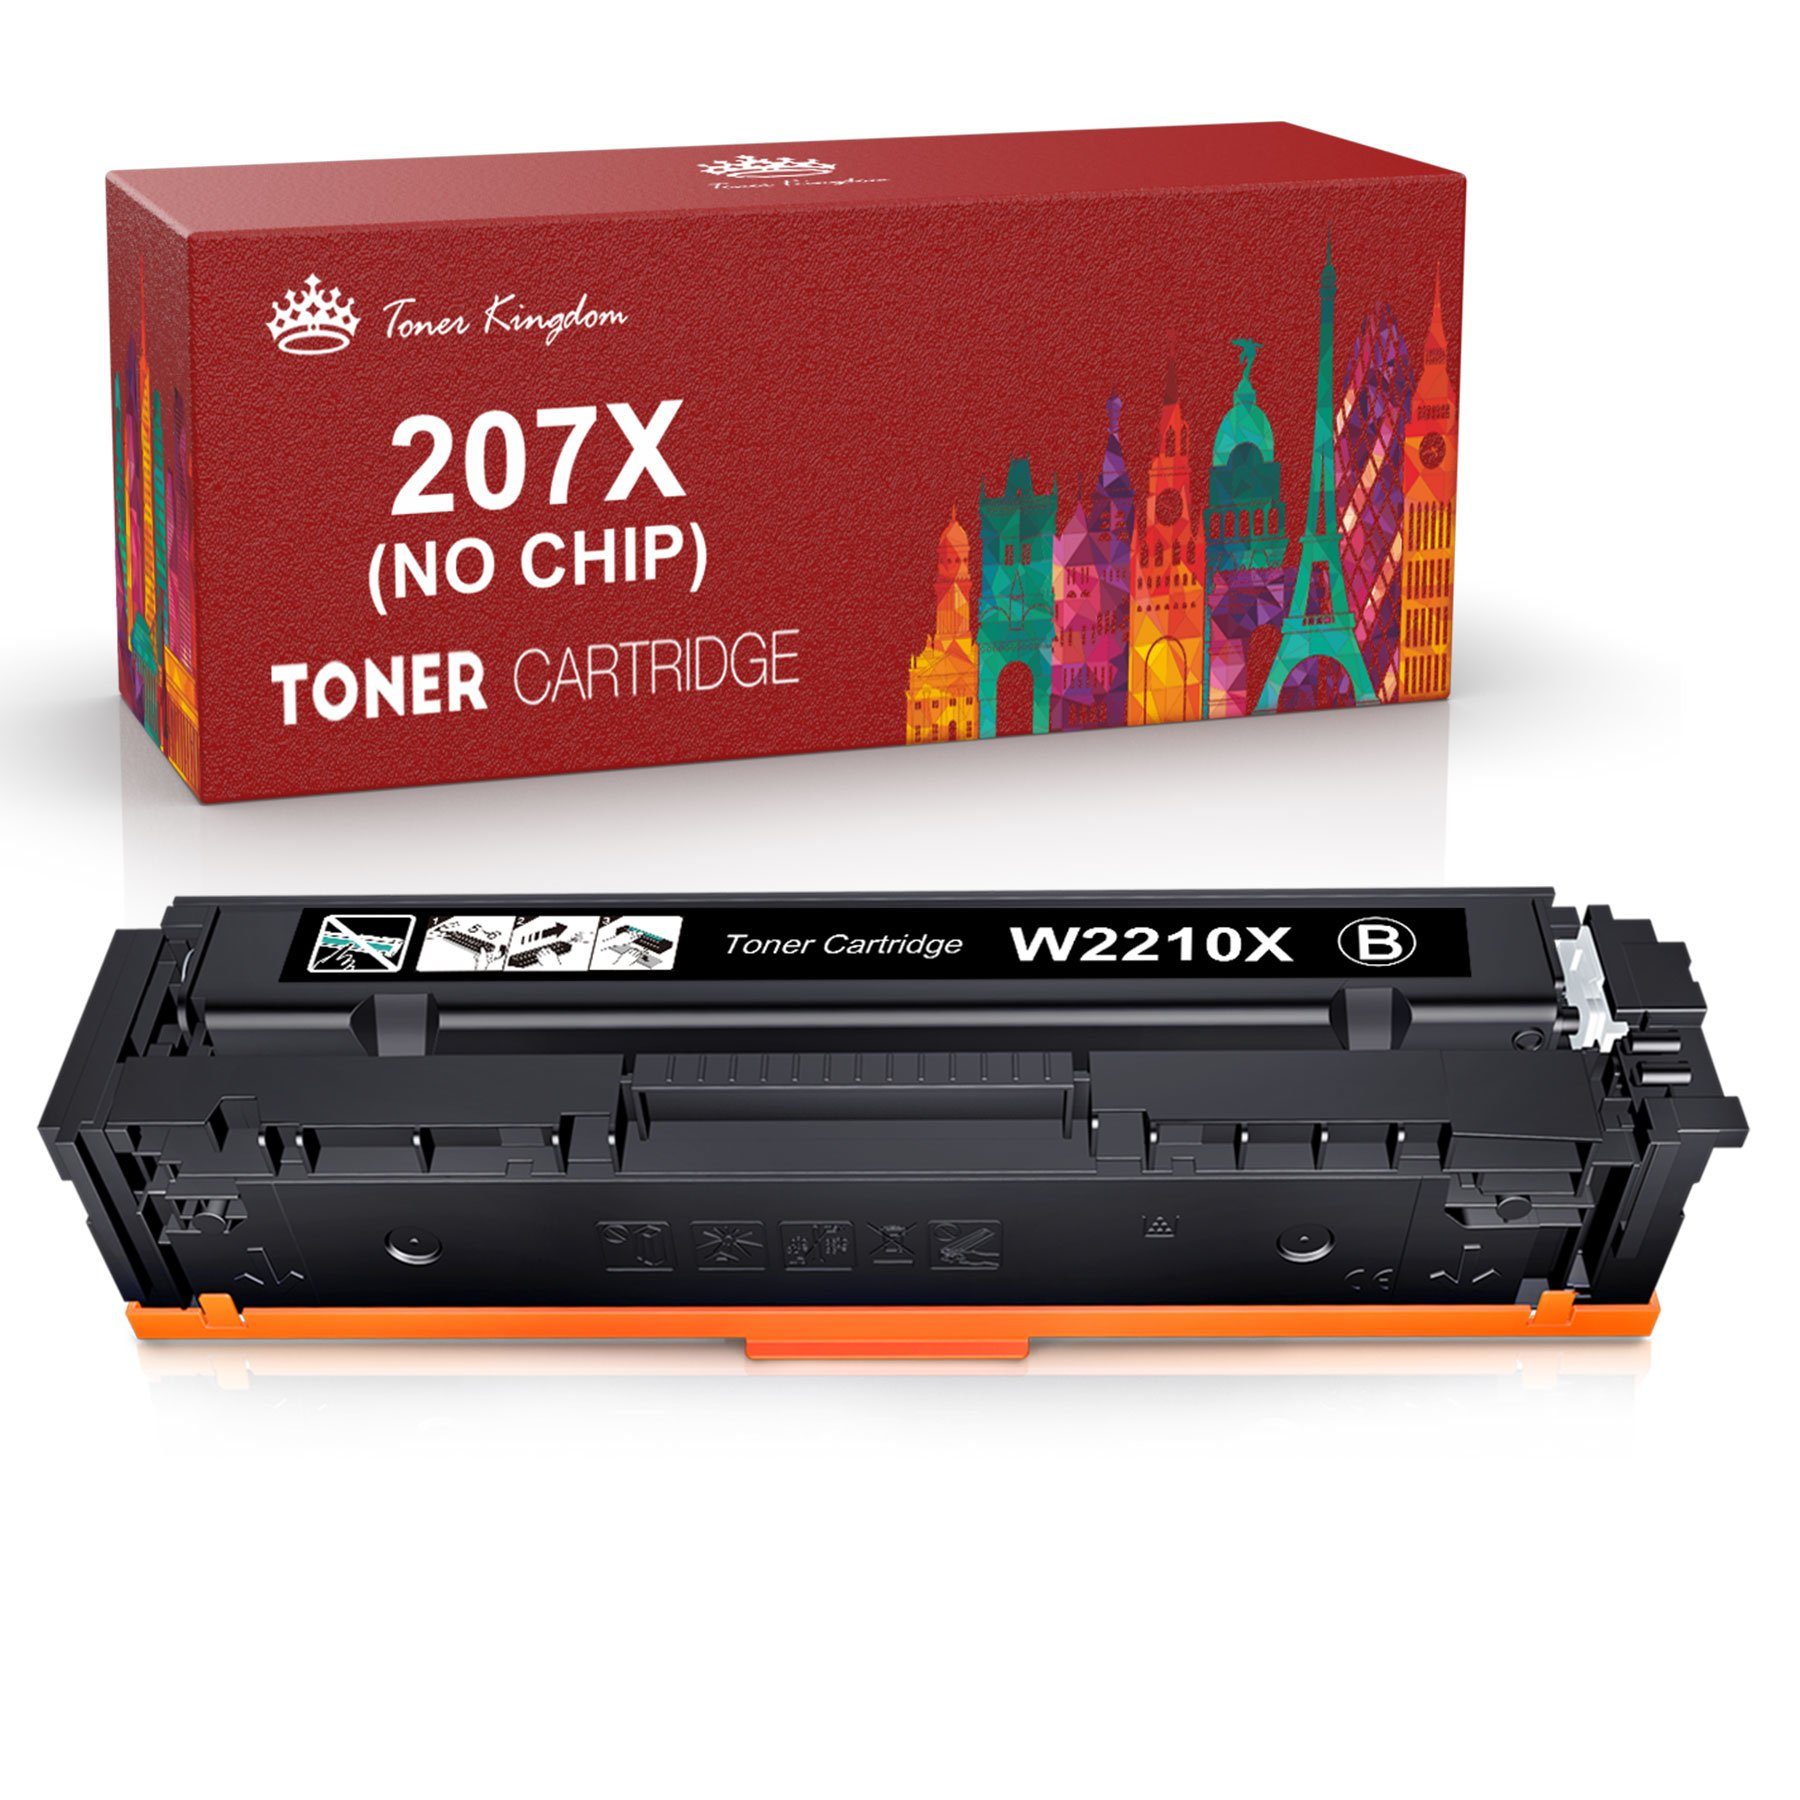 Toner Kingdom Tonerpatrone Ohne Chip für HP 207X 207A W2210X W2211X W2212X W2213X, Color Laserjet Pro MFP M283fdw M282nw M283fdn M255dw M255nw 207X Schwarz